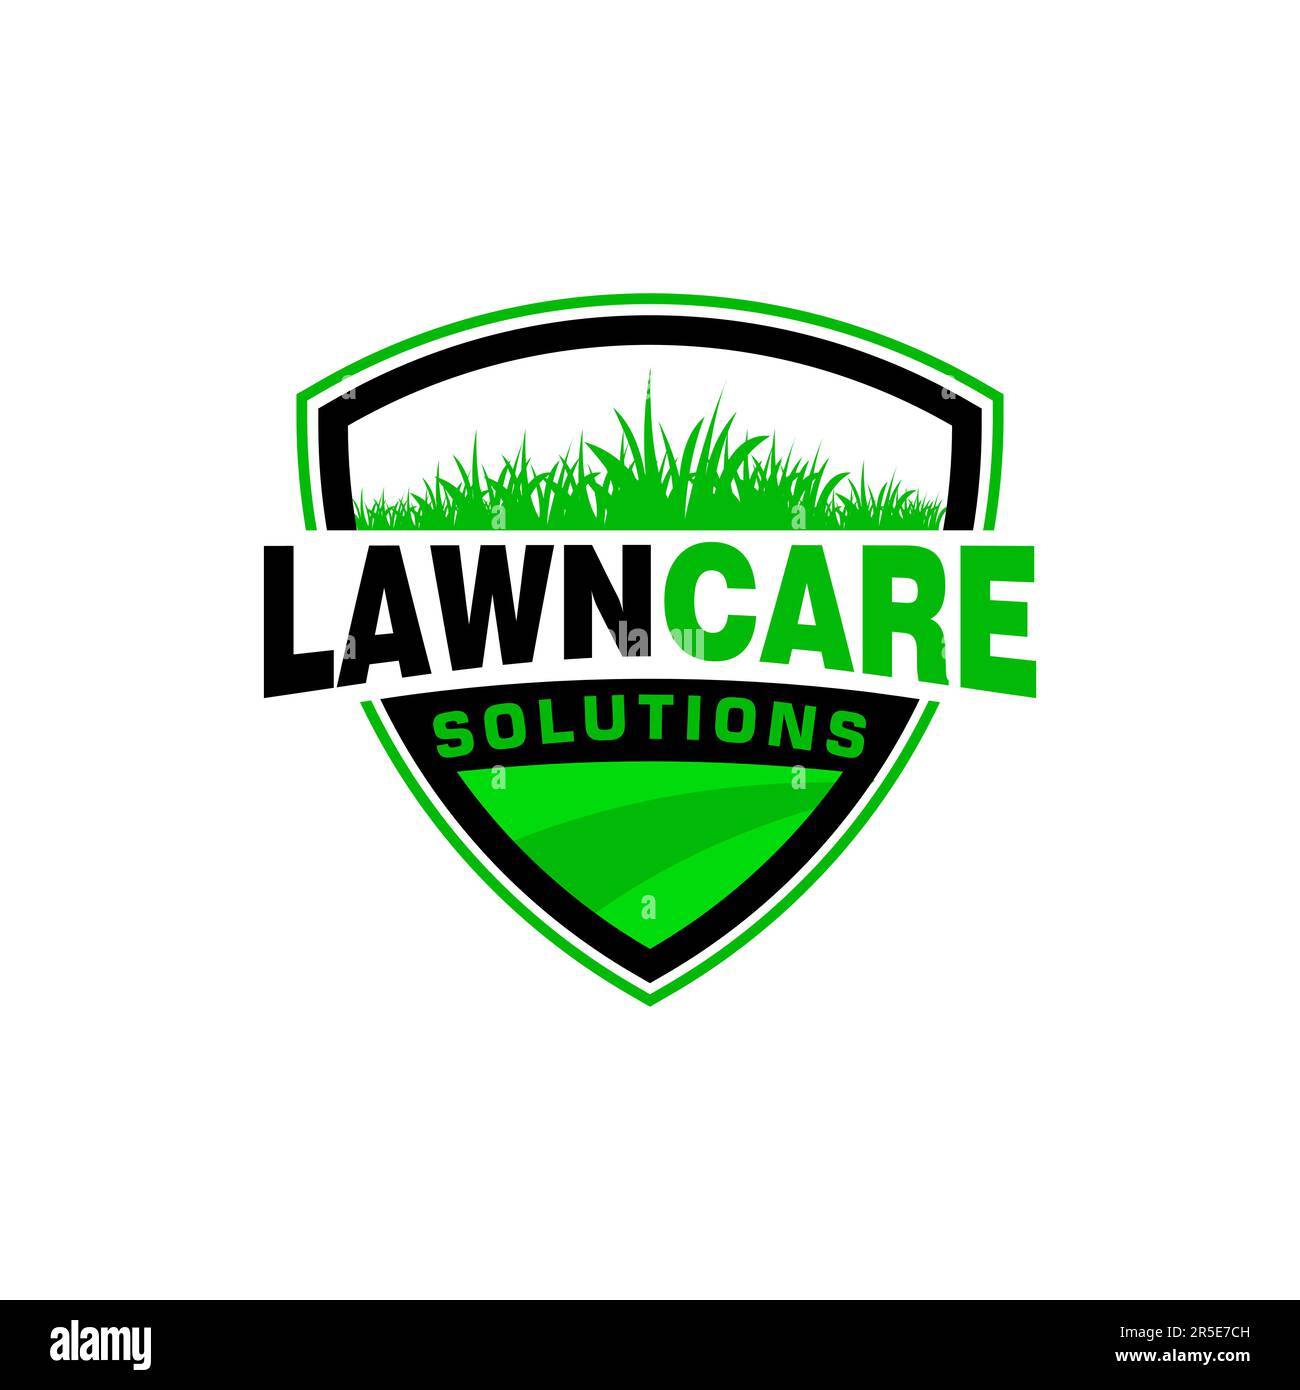 lawn care logos design